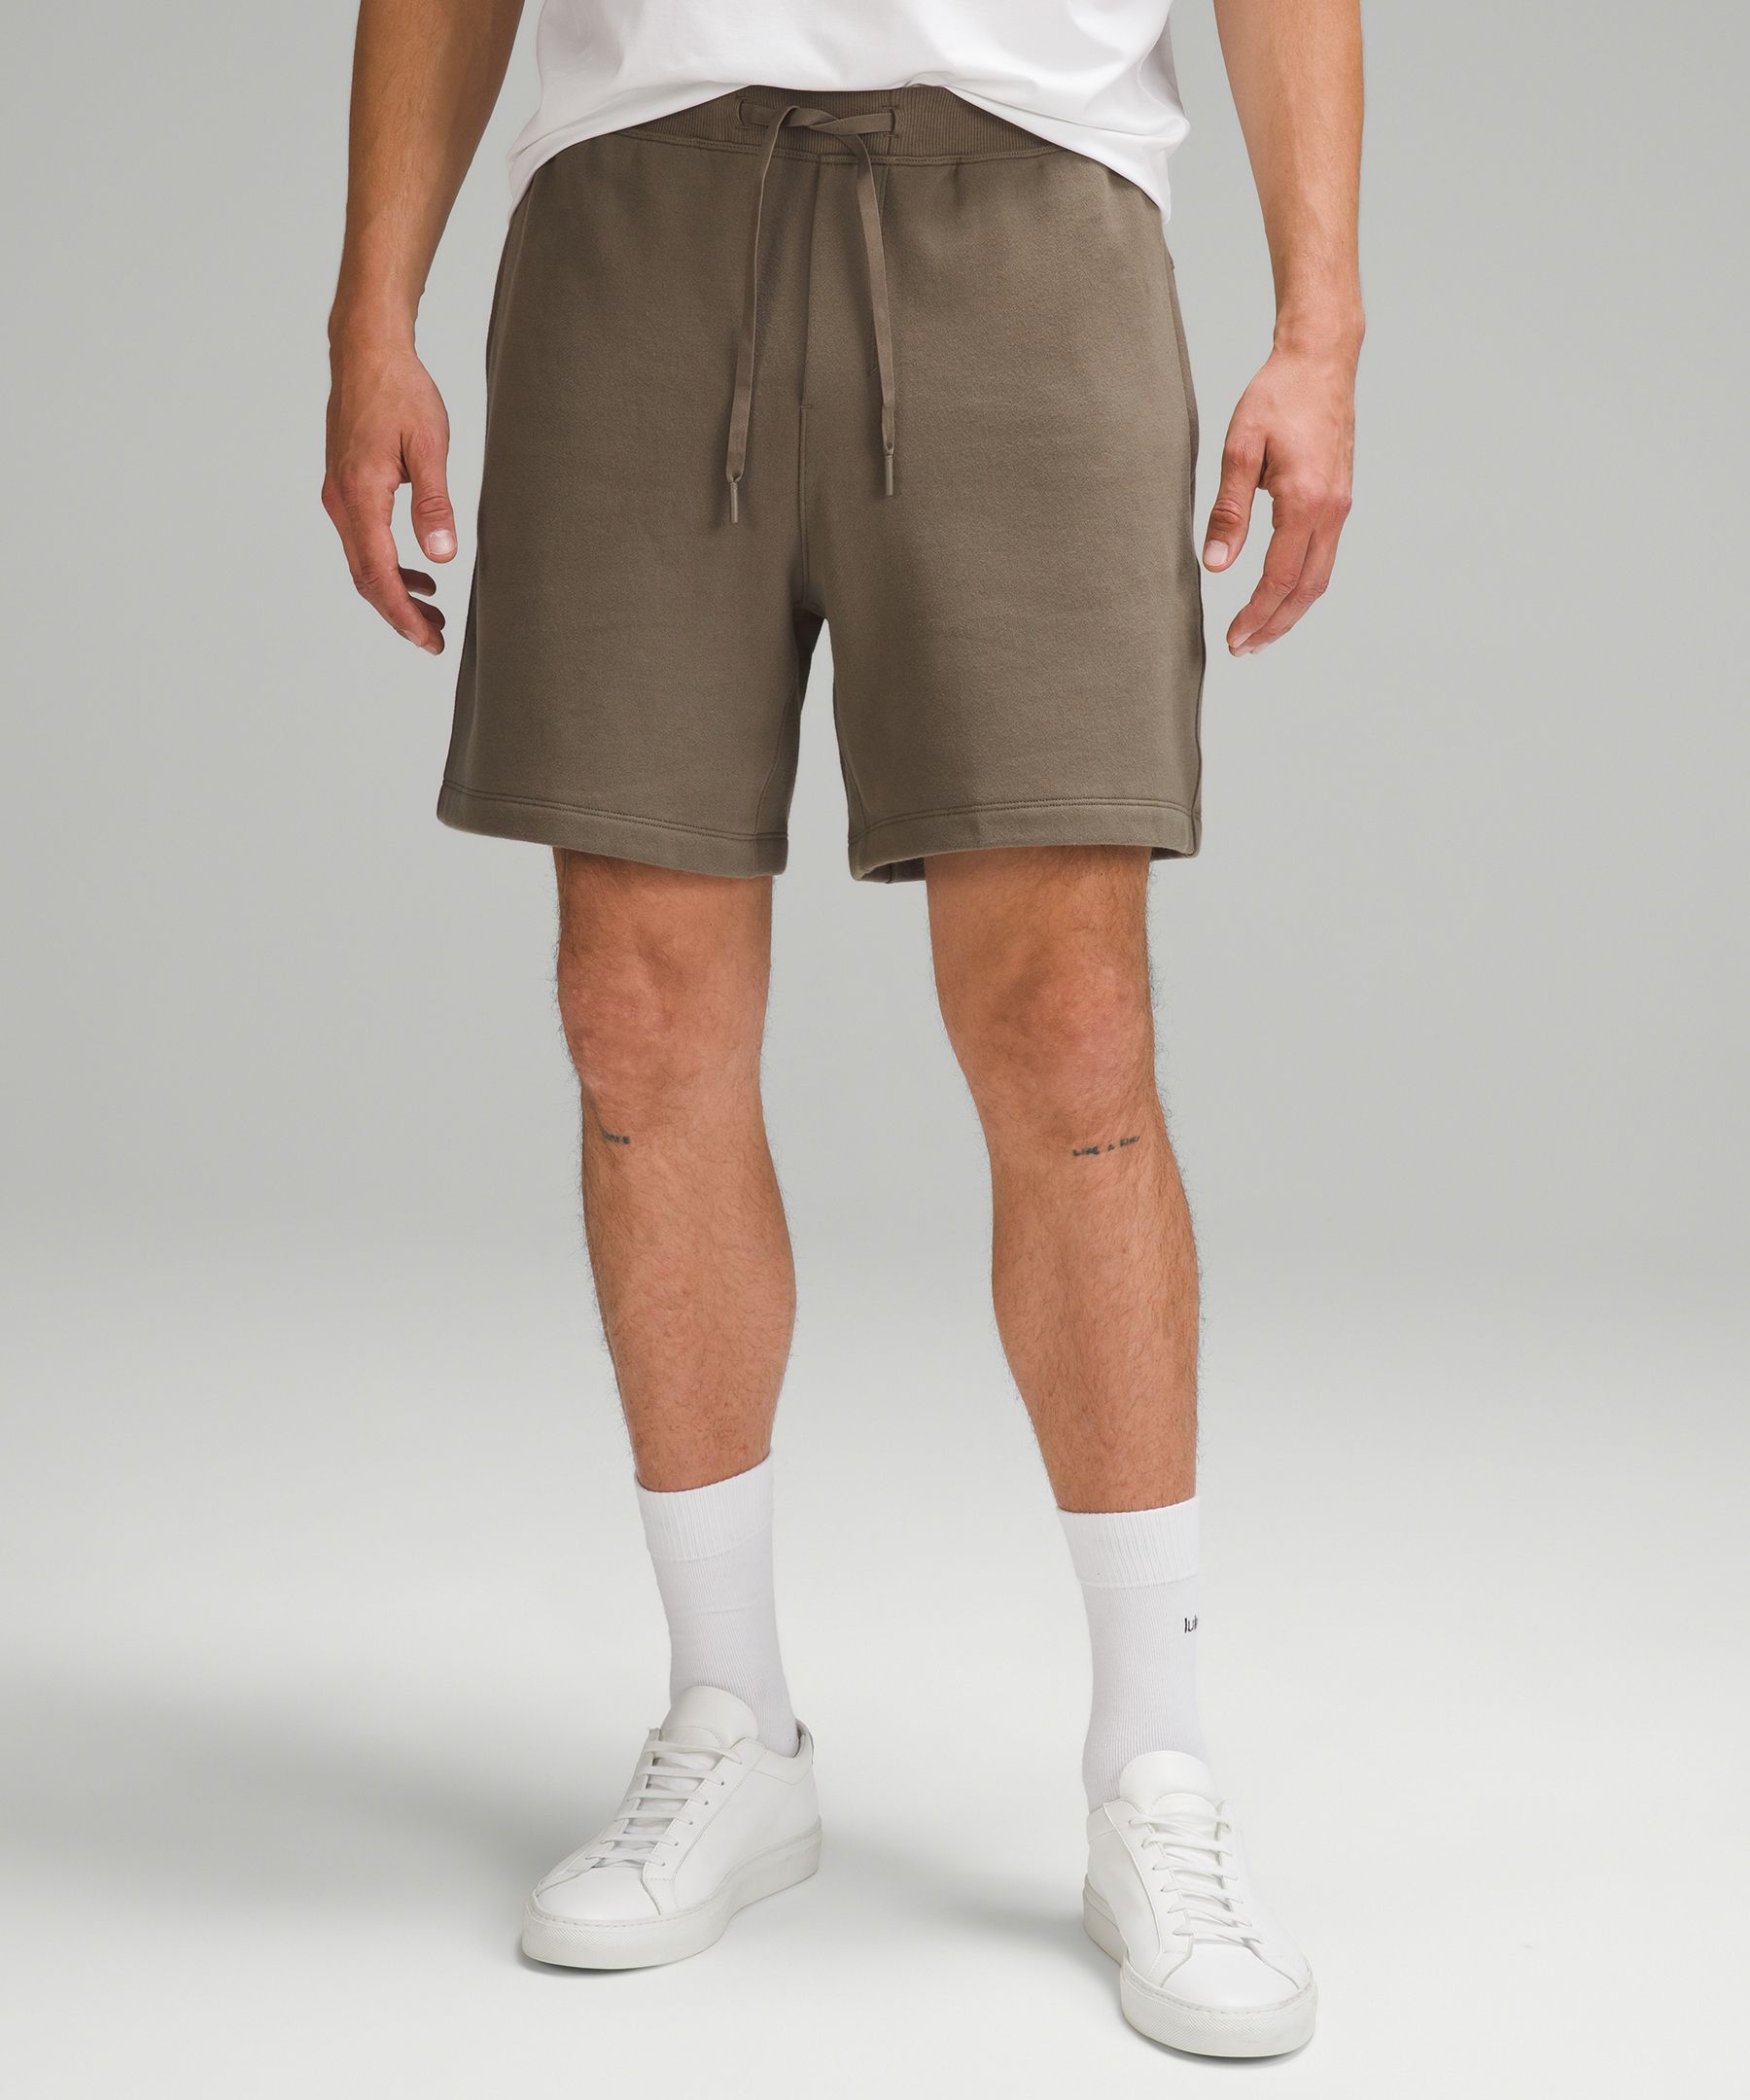 Steady State Short 7" | Men's Shorts